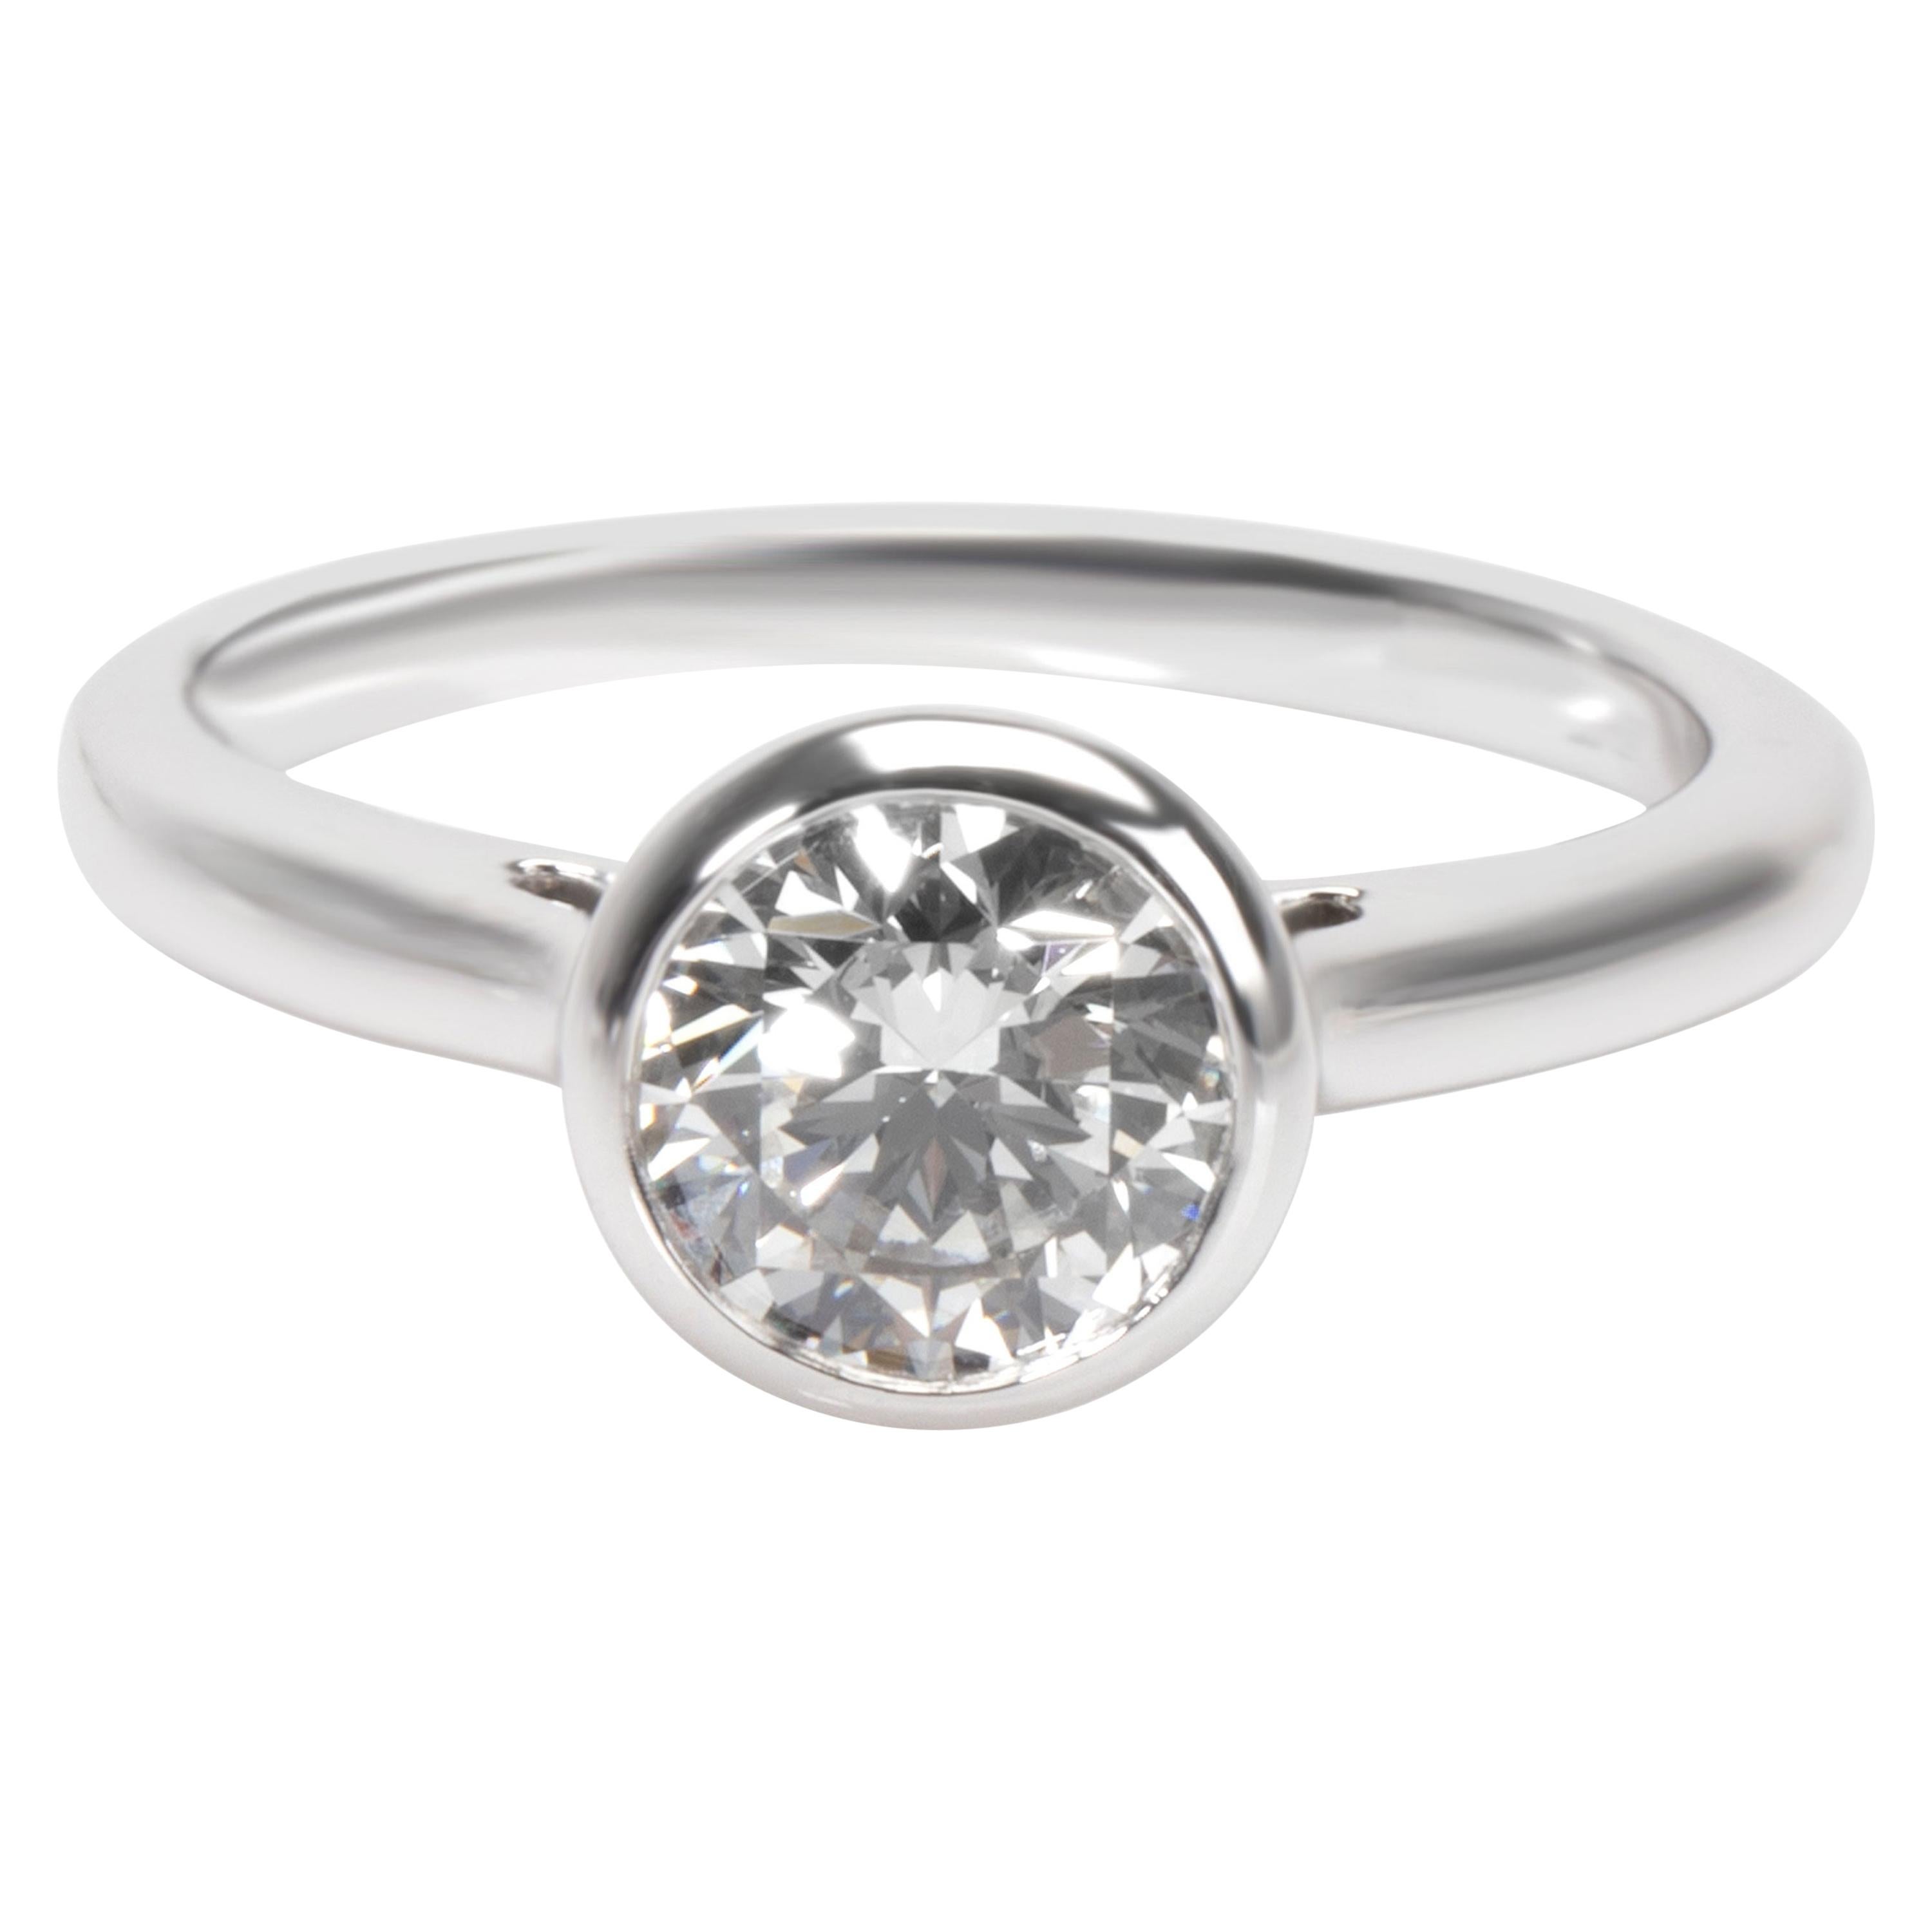 Blue Nile Diamond Engagement Ring in Platinum GIA Certified E VVS2 1.09 Carat